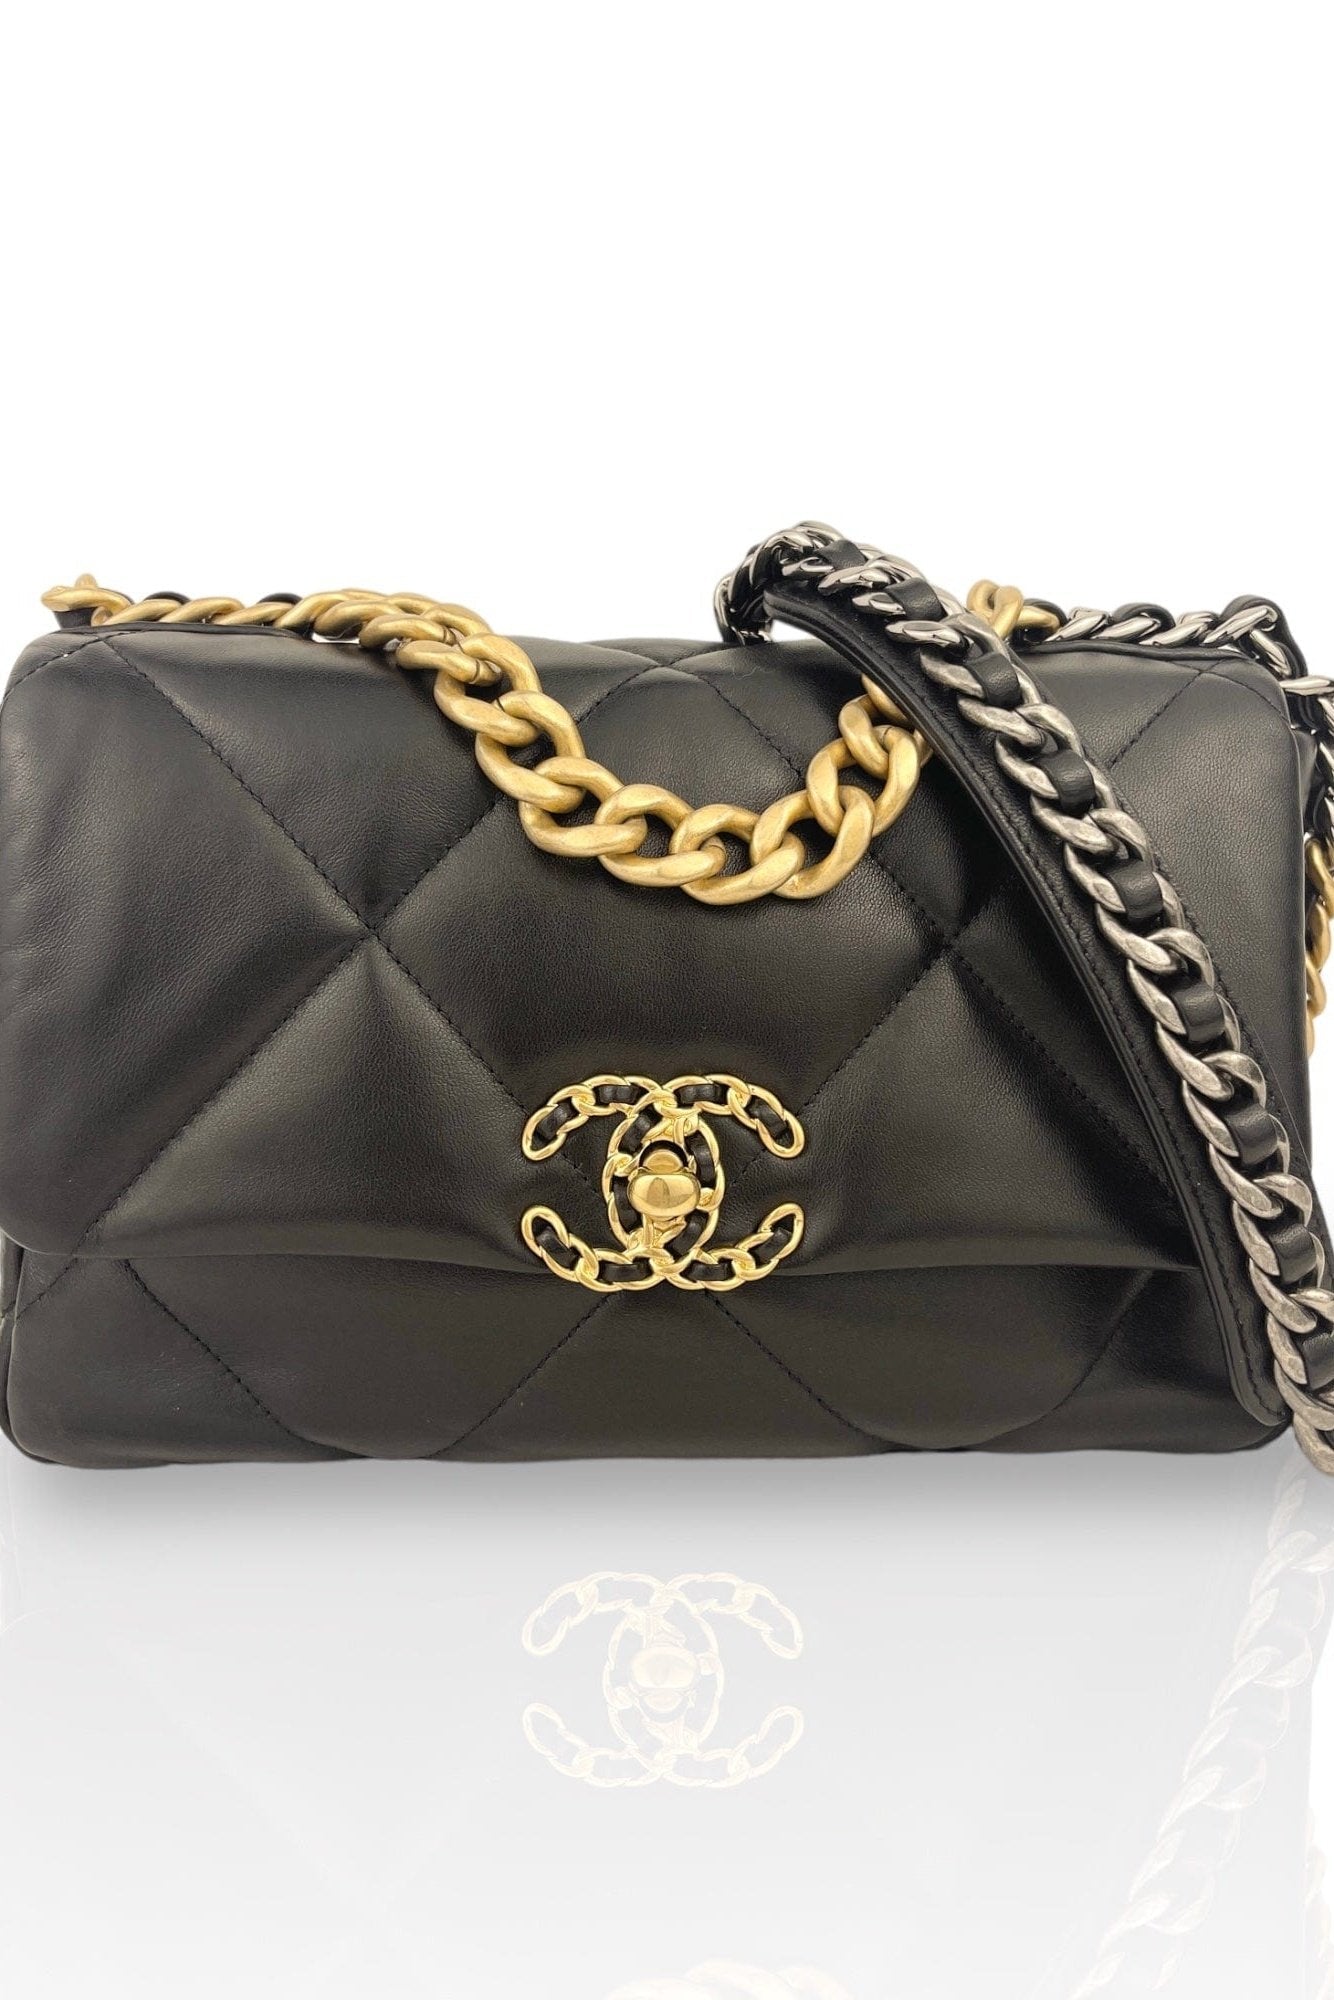 Chanel 19 Flap Bag Medium Black GHW Bag